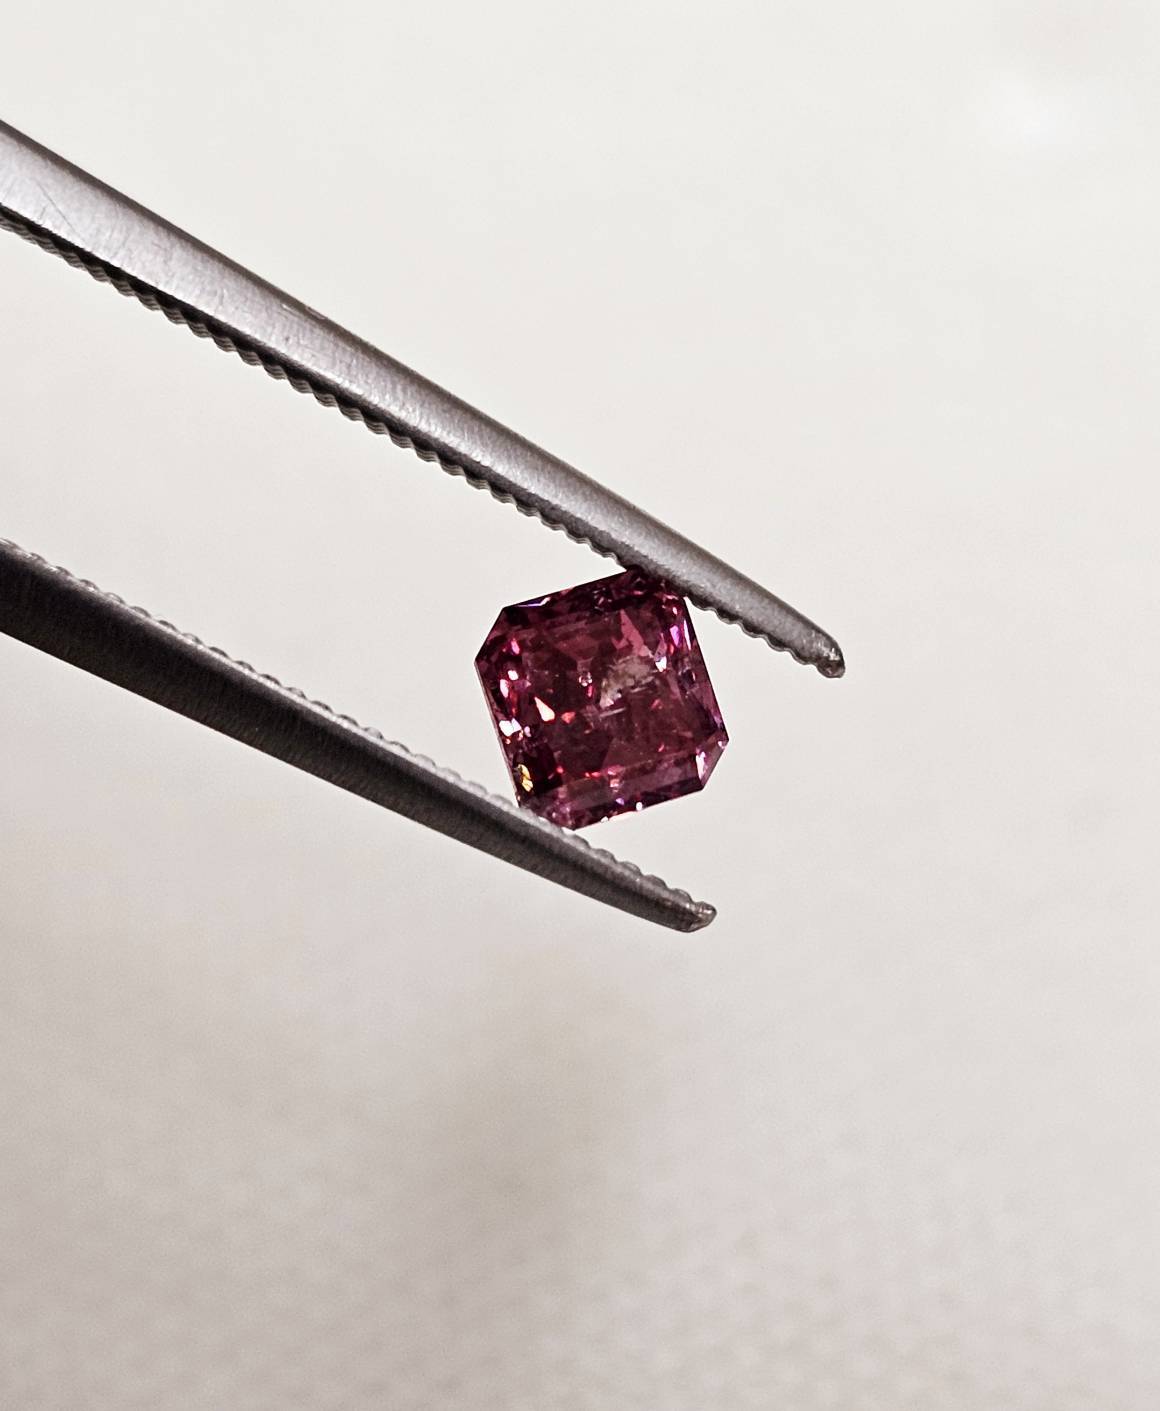 【 GIA 鑑定書付】 アーガイル産 0.33ct Fancy purplish red diamond 天然 レッドダイヤモンド ルース 裸石